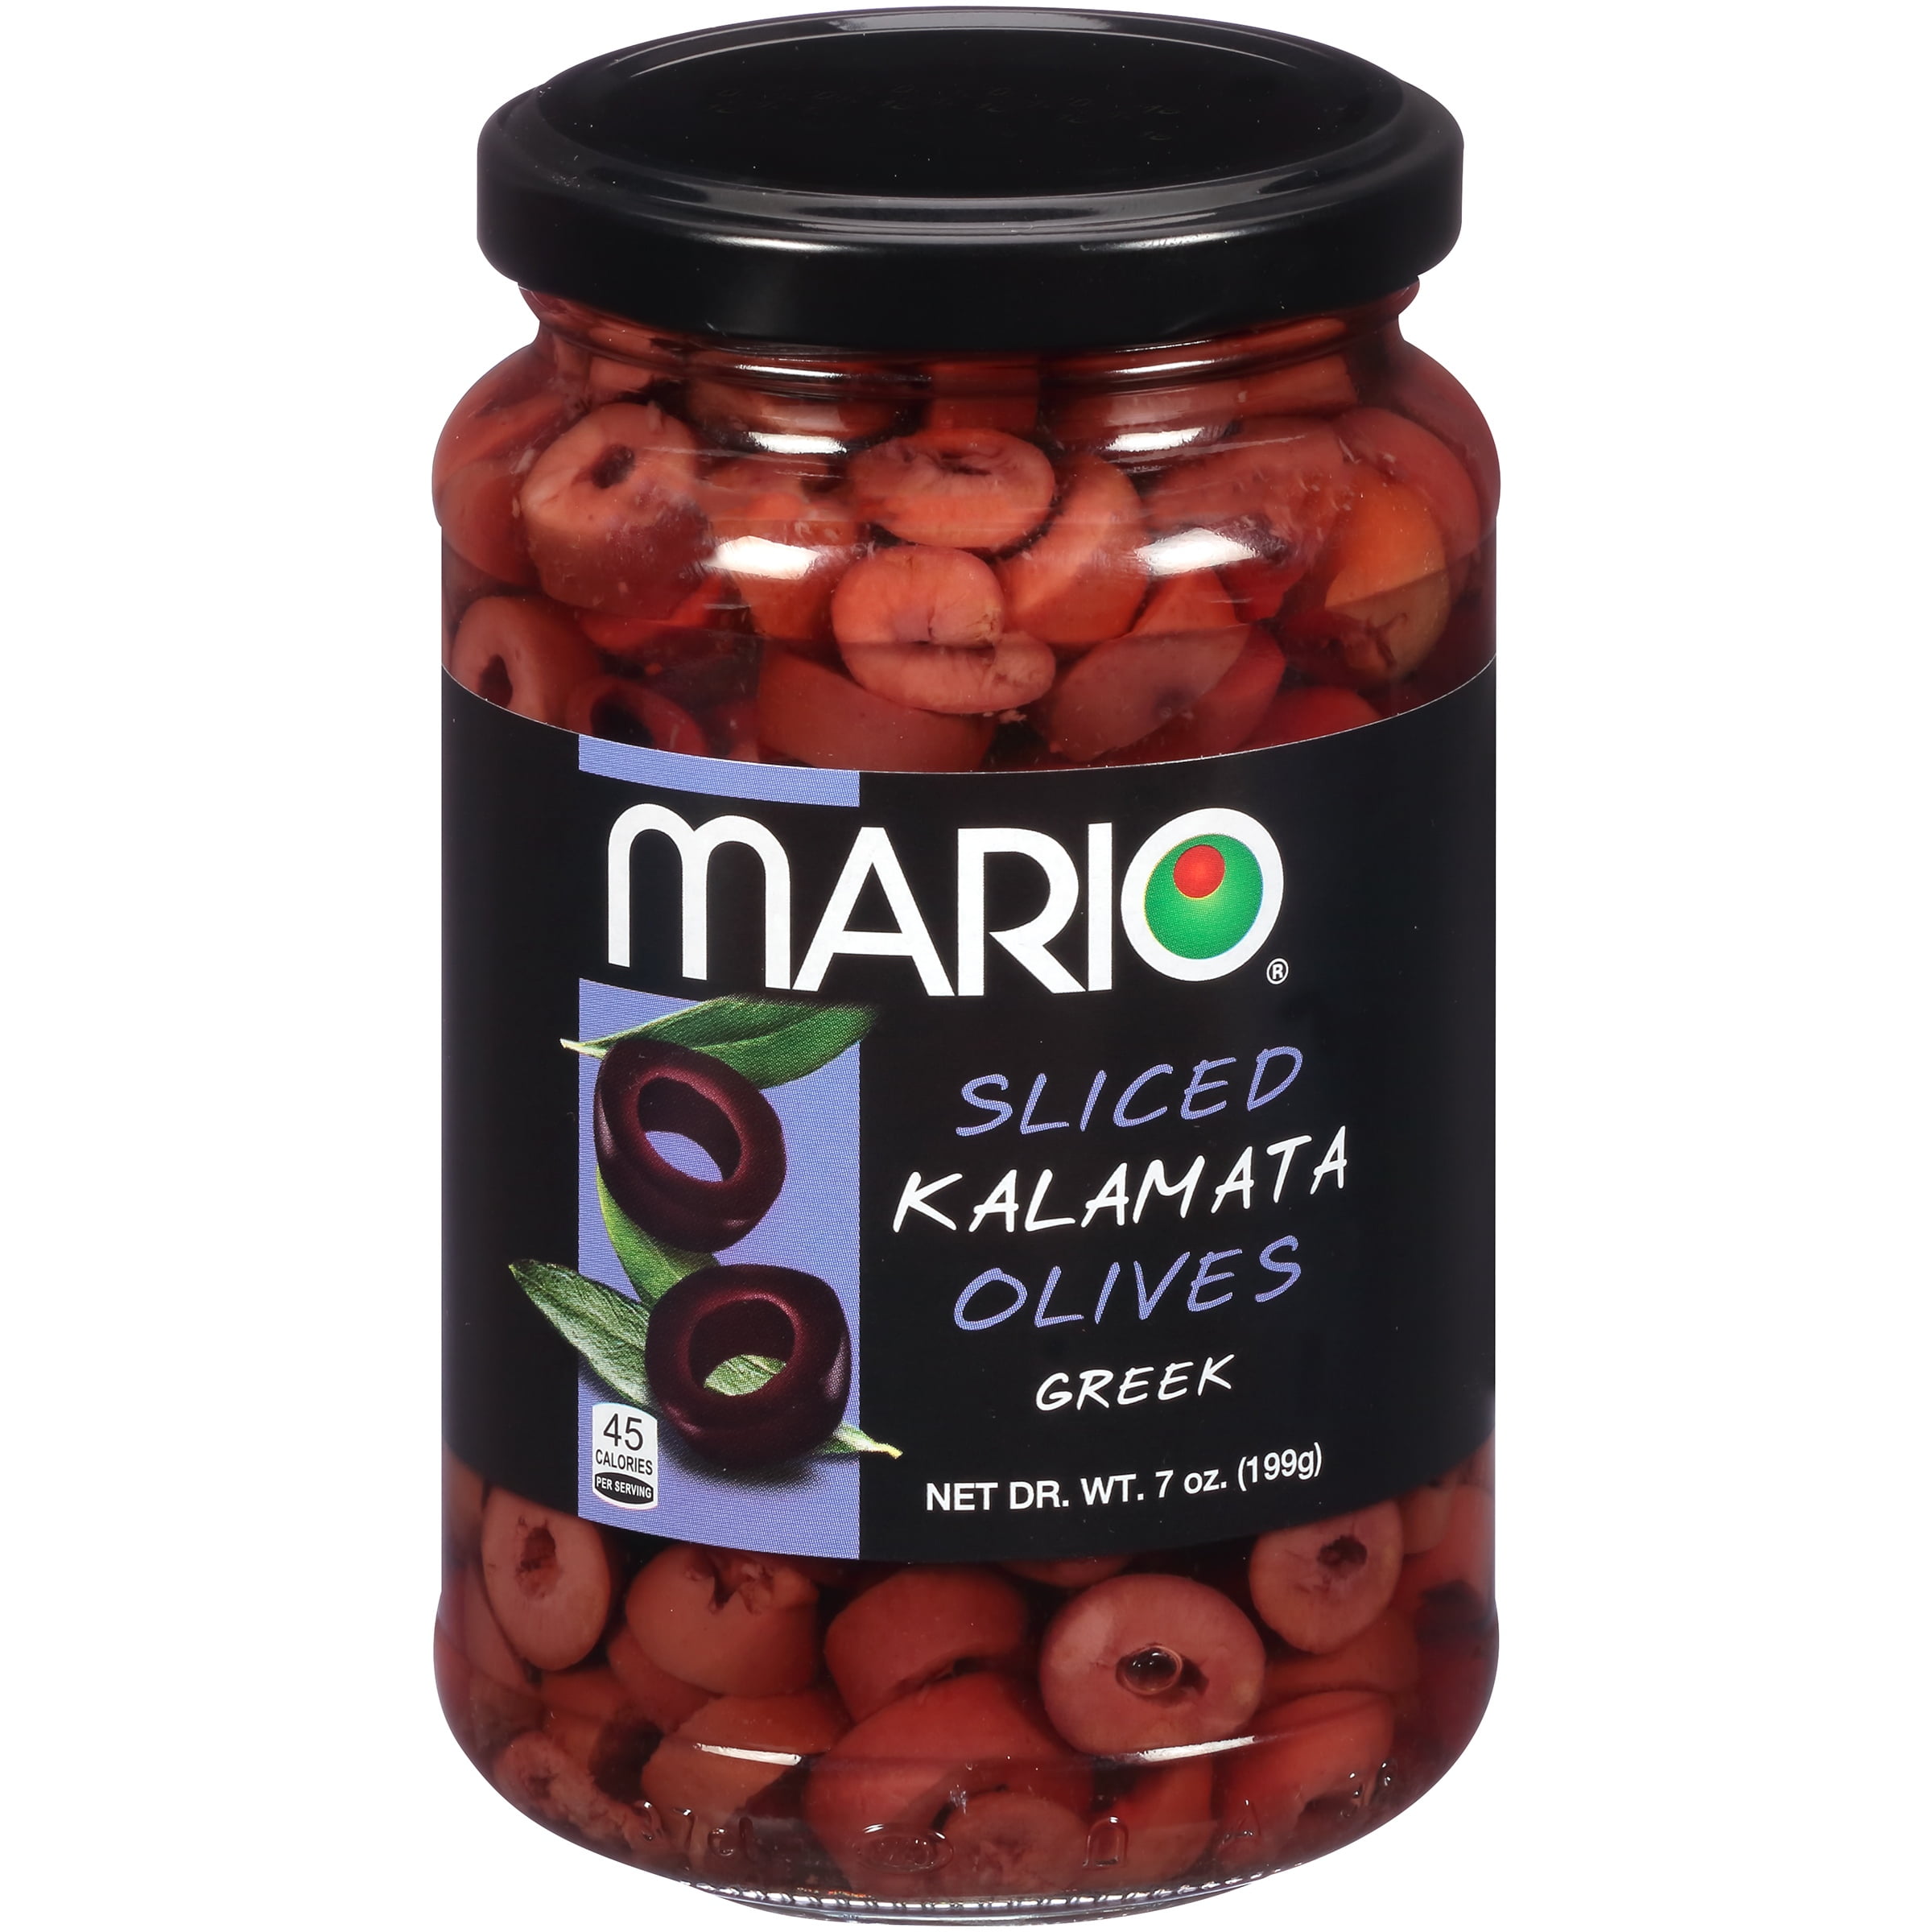 Sliced Greek Kalamata Olives The Natural Products Brands Directory